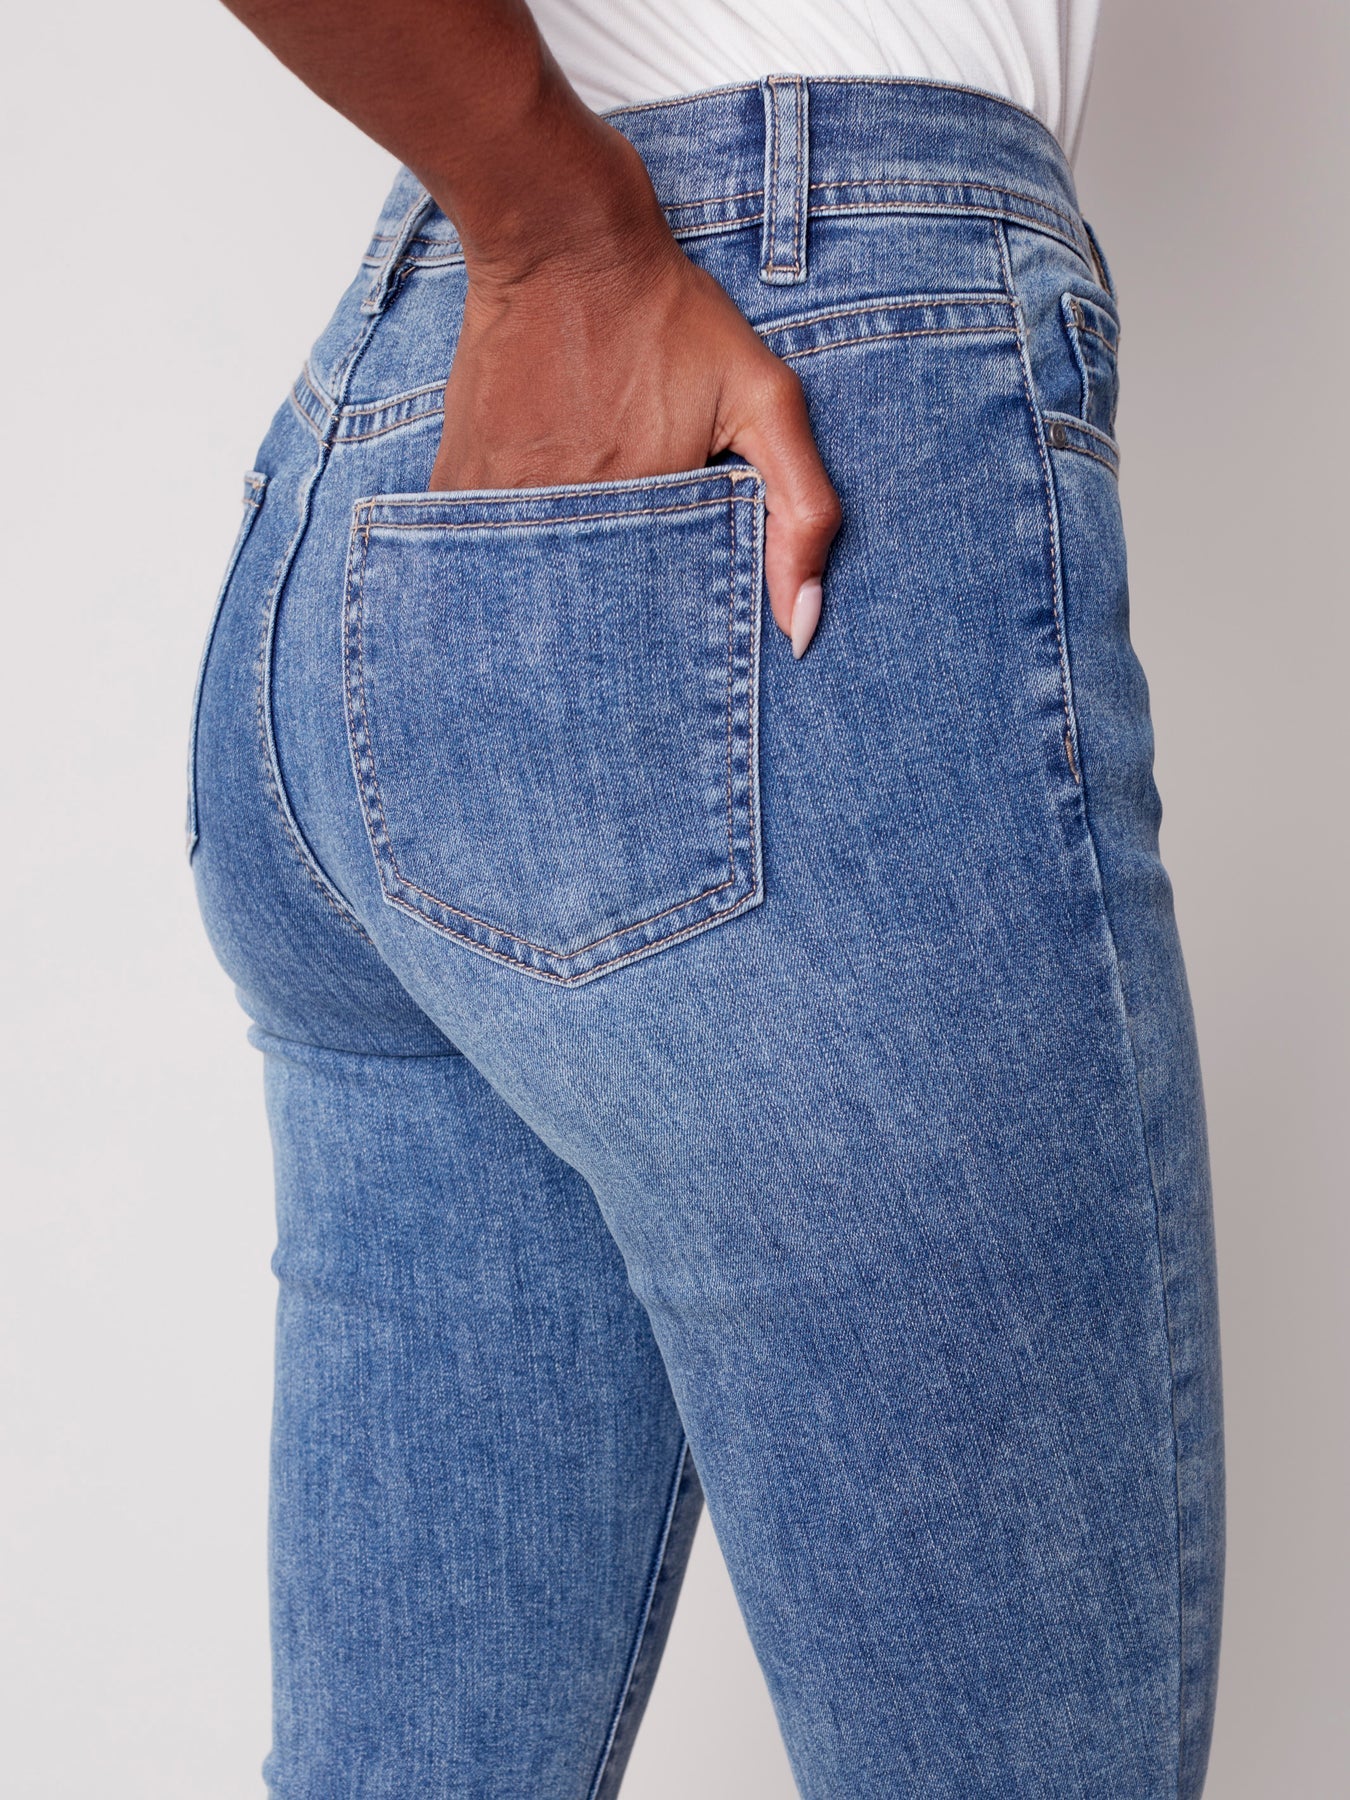 Style & Co Womens Jeans Denim Joggers Elastic Waist High Rise Blue